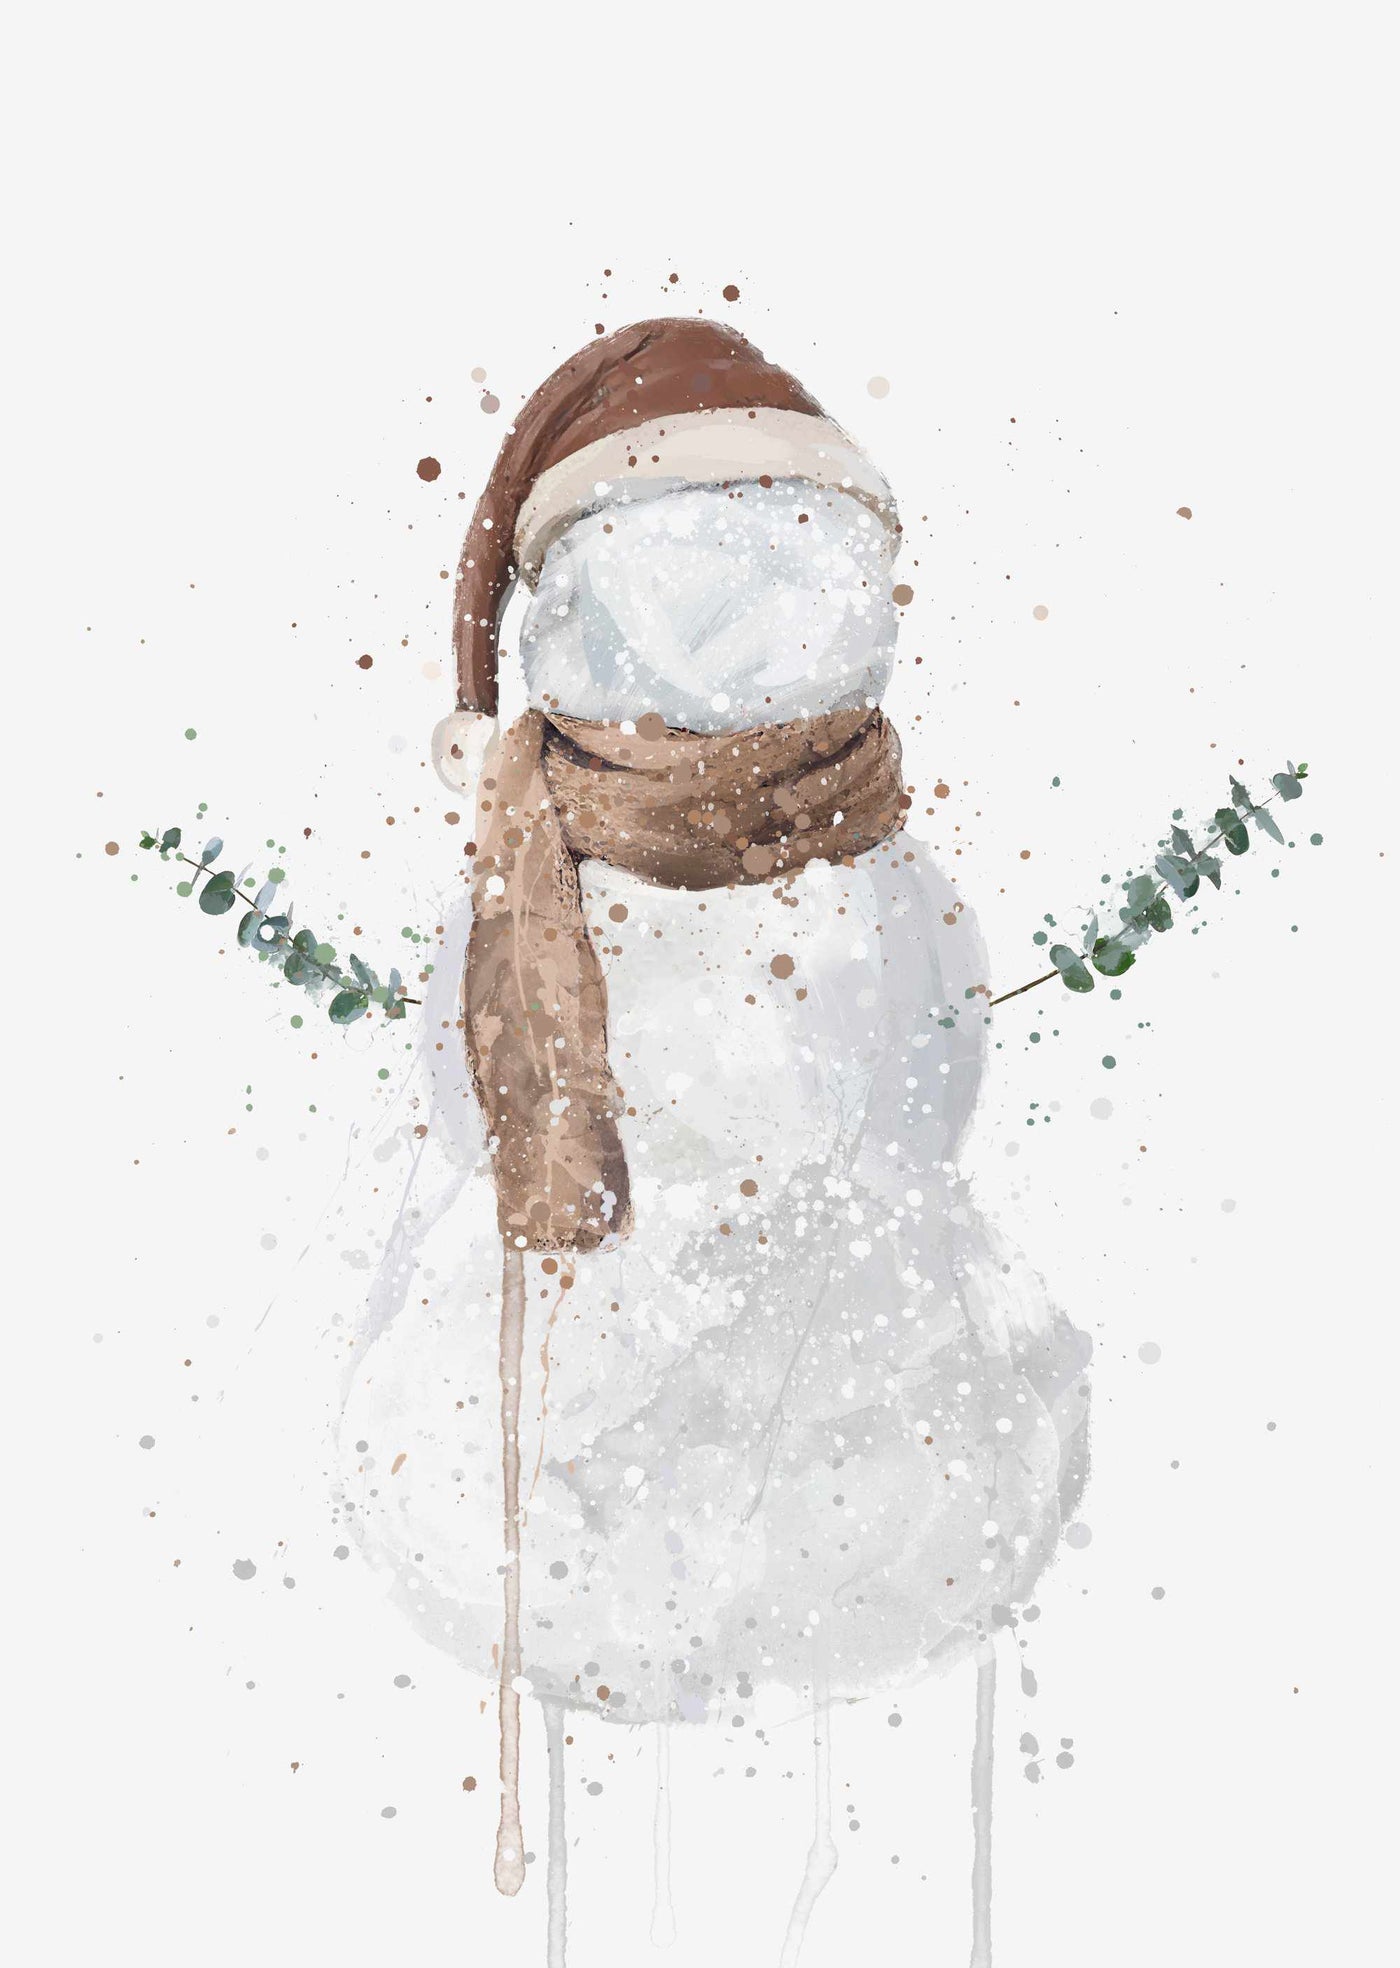 Snowman Wall Art Print, Contemporary and Stylish Christmas Decoration Alternative Xmas Decor